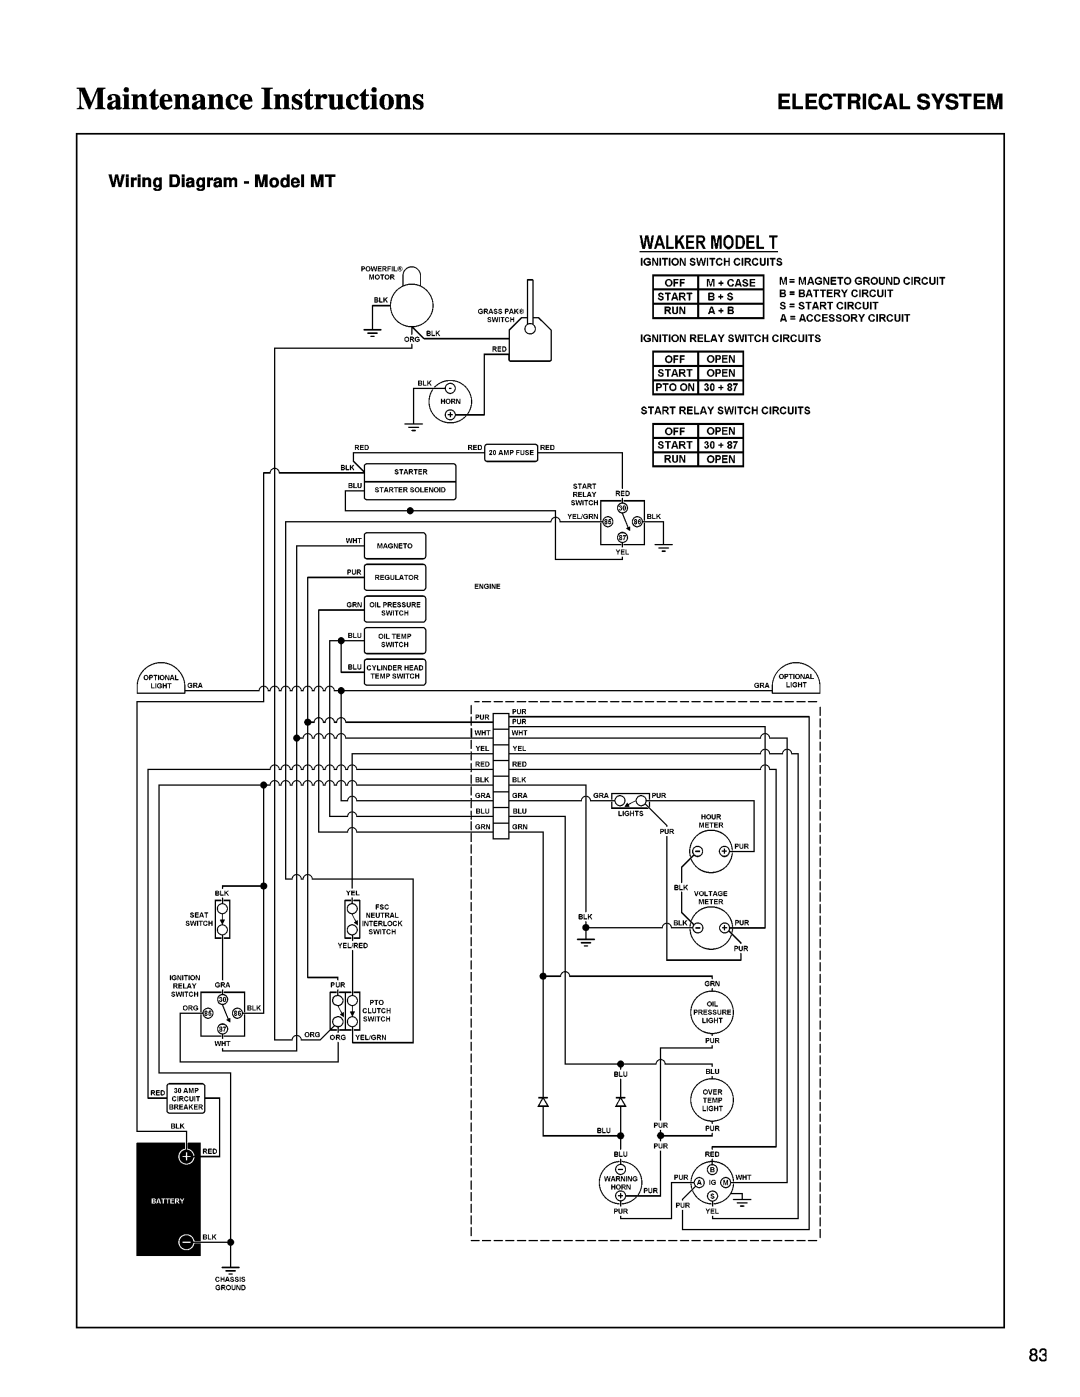 Walker owner manual Electrical System, Maintenance Instructions, Wiring Diagram - Model MT 